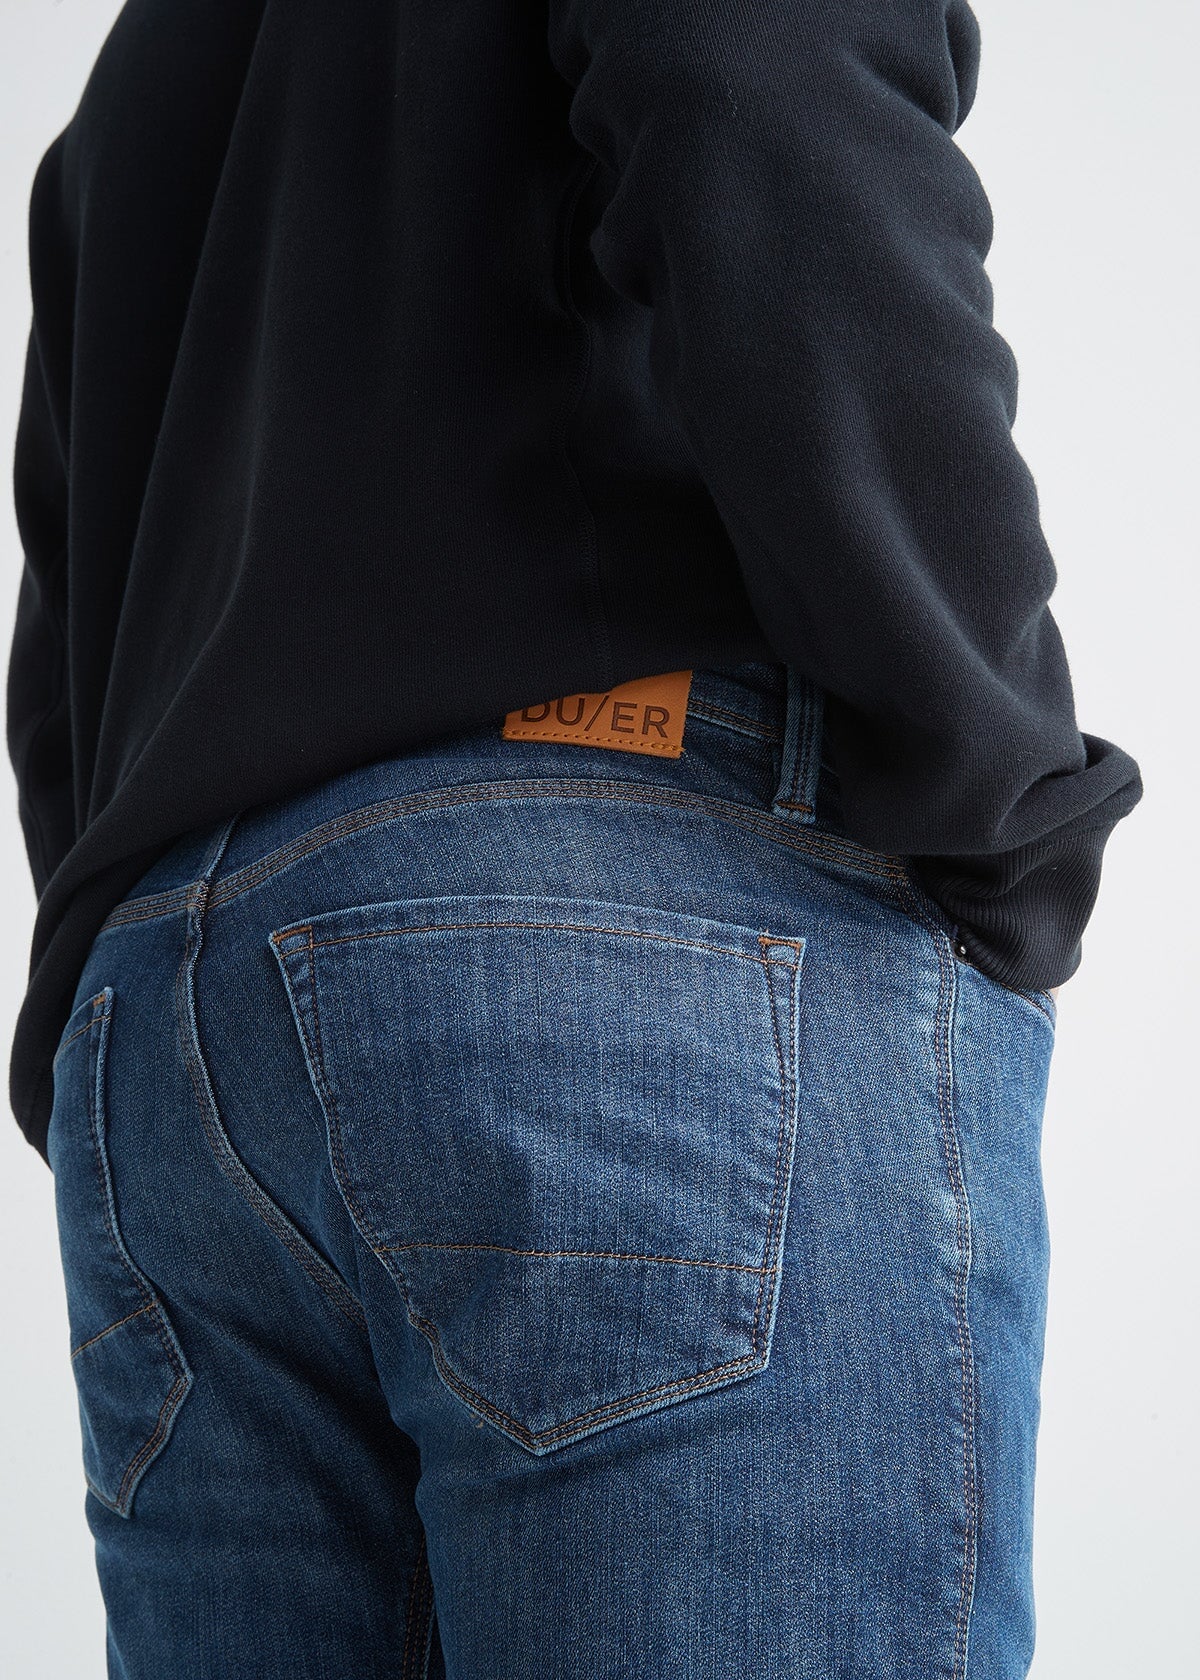 Qazel Vorrlon Men's Fleece Lined Jeans for Men Winter Warm Flannel Lined  Jeans Mens Skinny Slim Fit Stretch Denim Pants Dark Blue, Size 28 at   Men's Clothing store